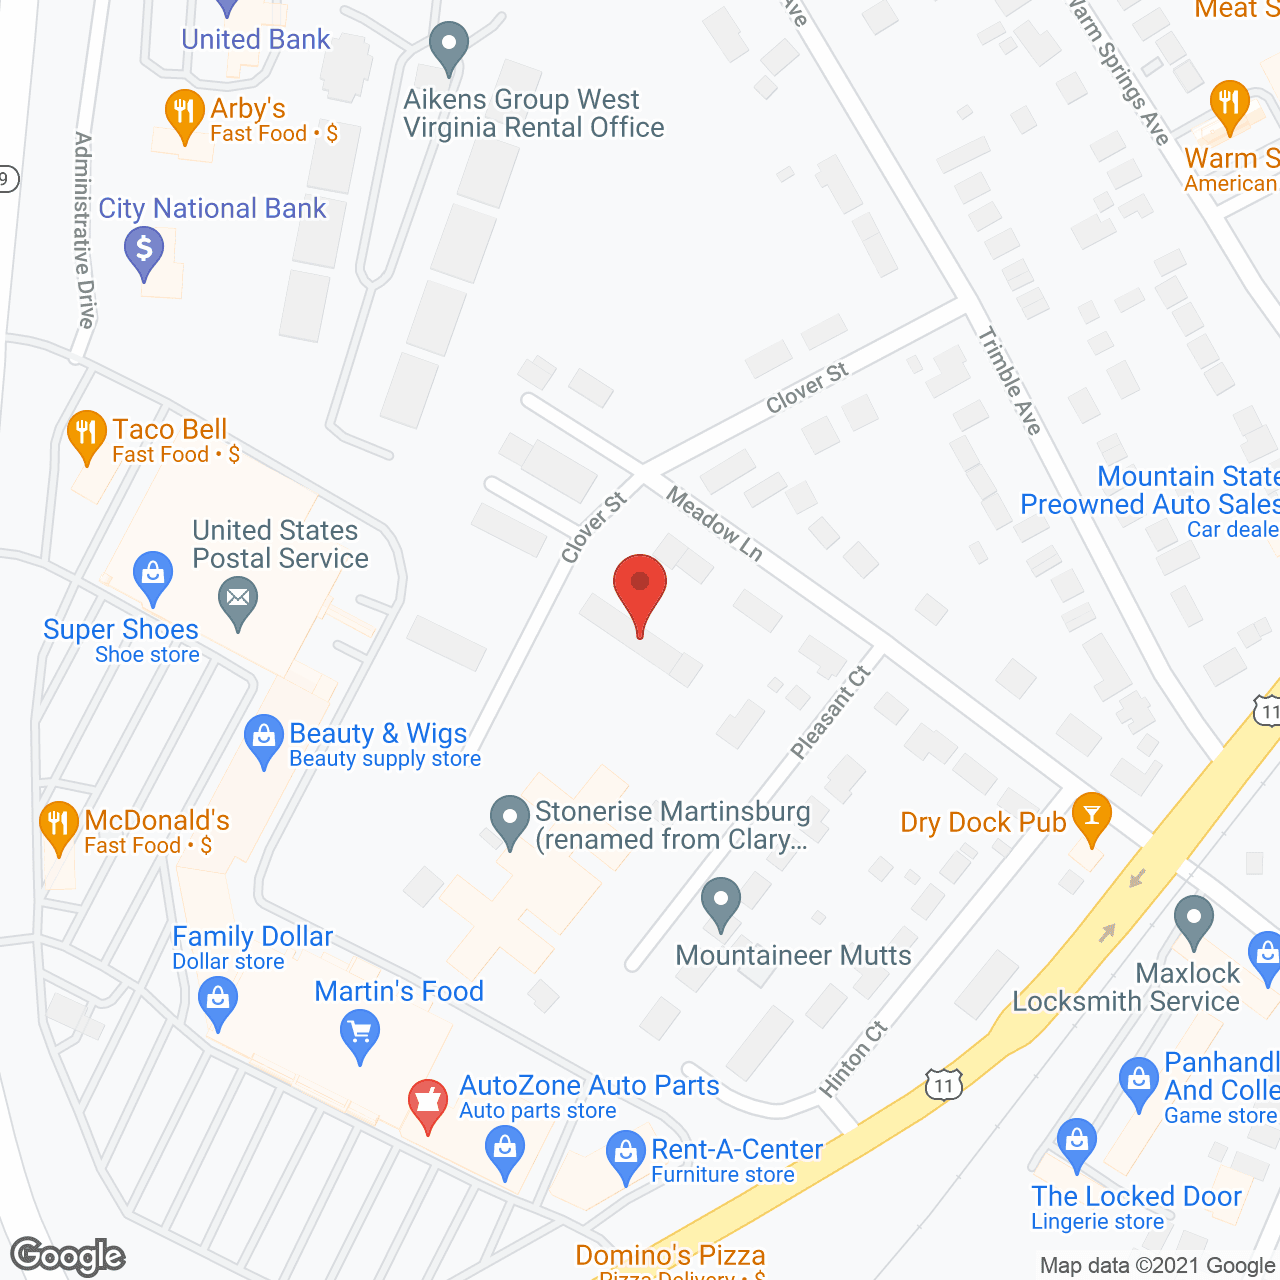 Martinsburg Healthcare Center in google map